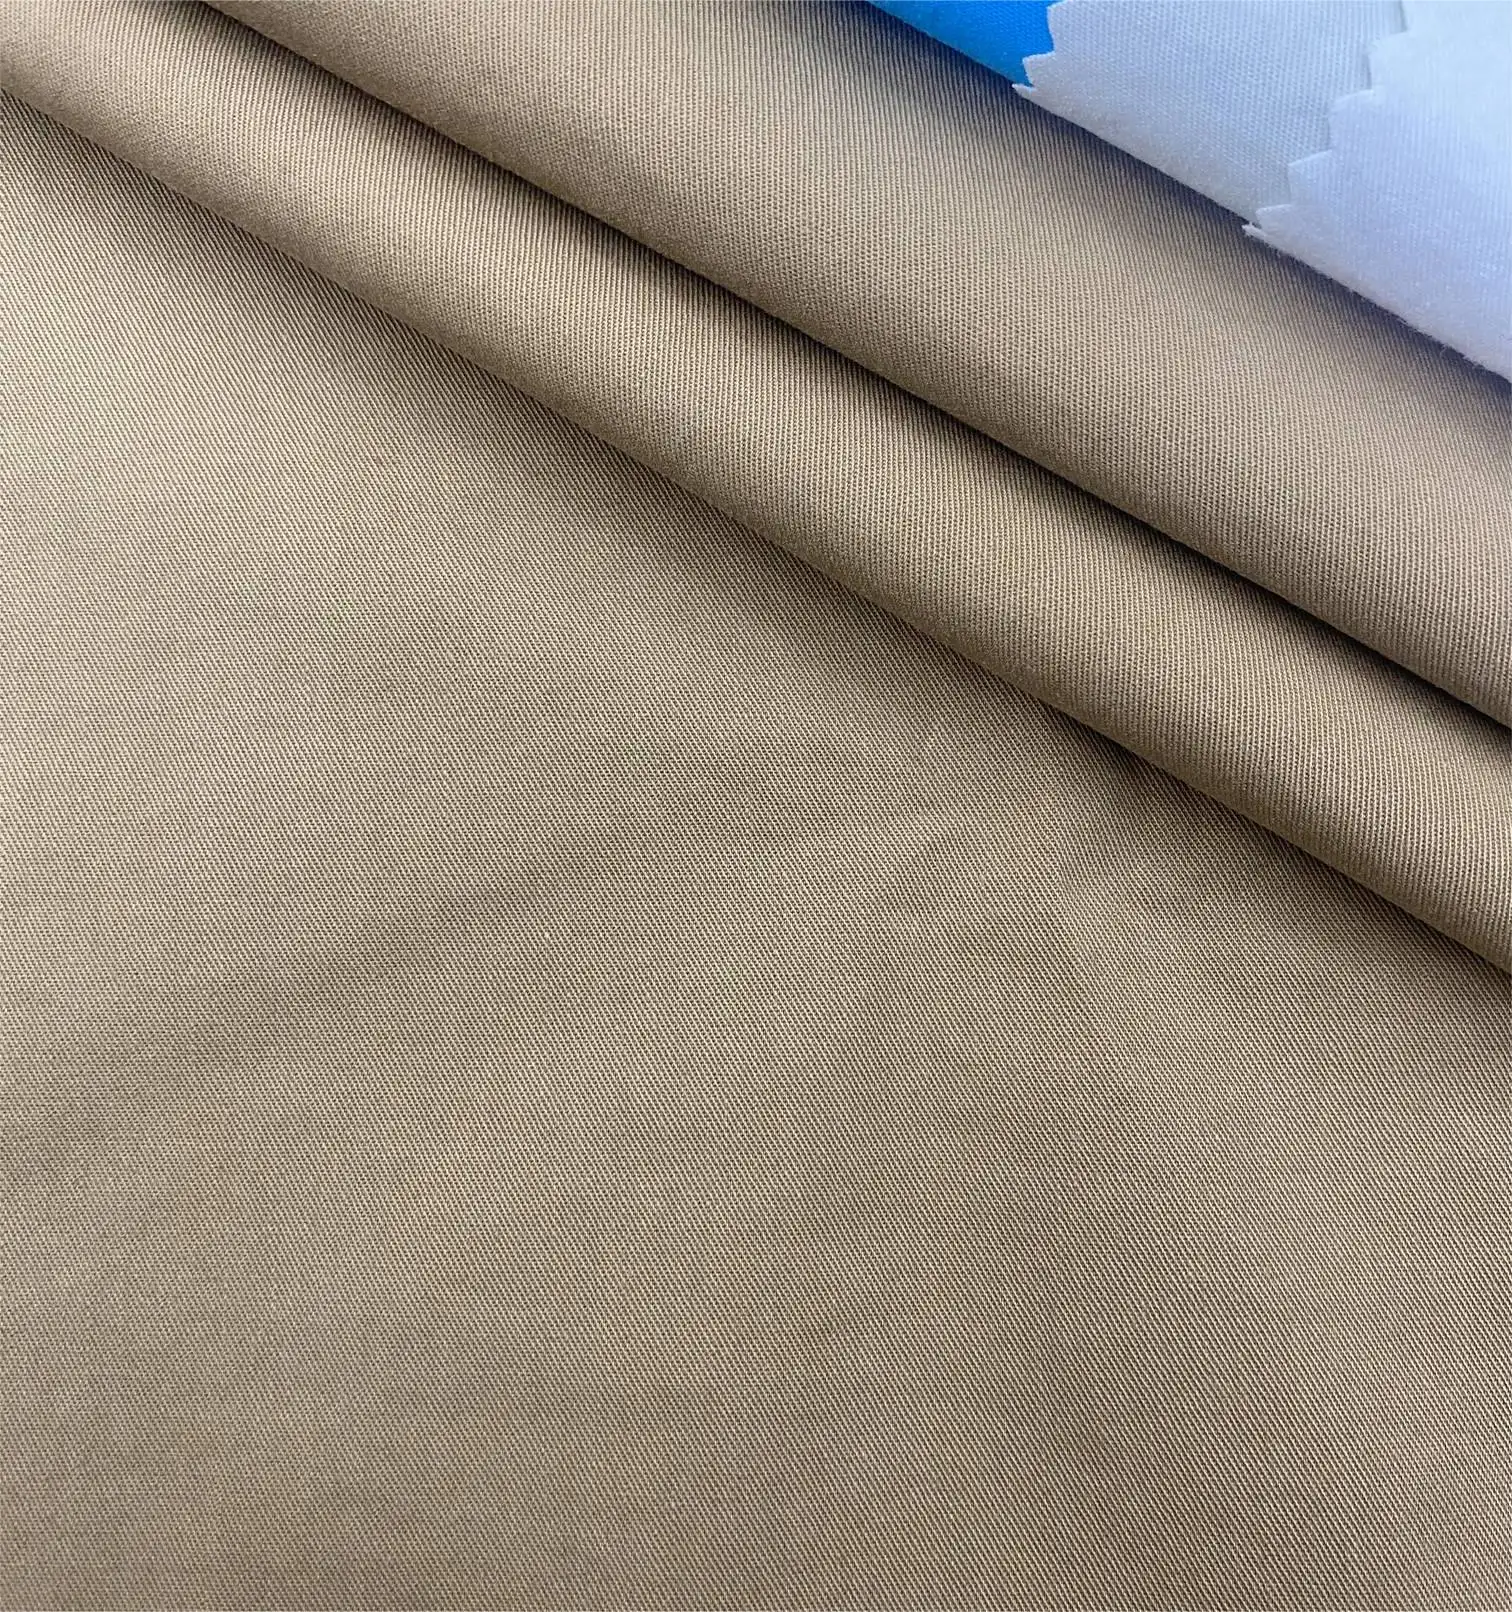 Shaoxing фабричная однотонная дышащая 100% хлопчатобумажная пряжа 188gsm окрашенная тканая ткань для платья